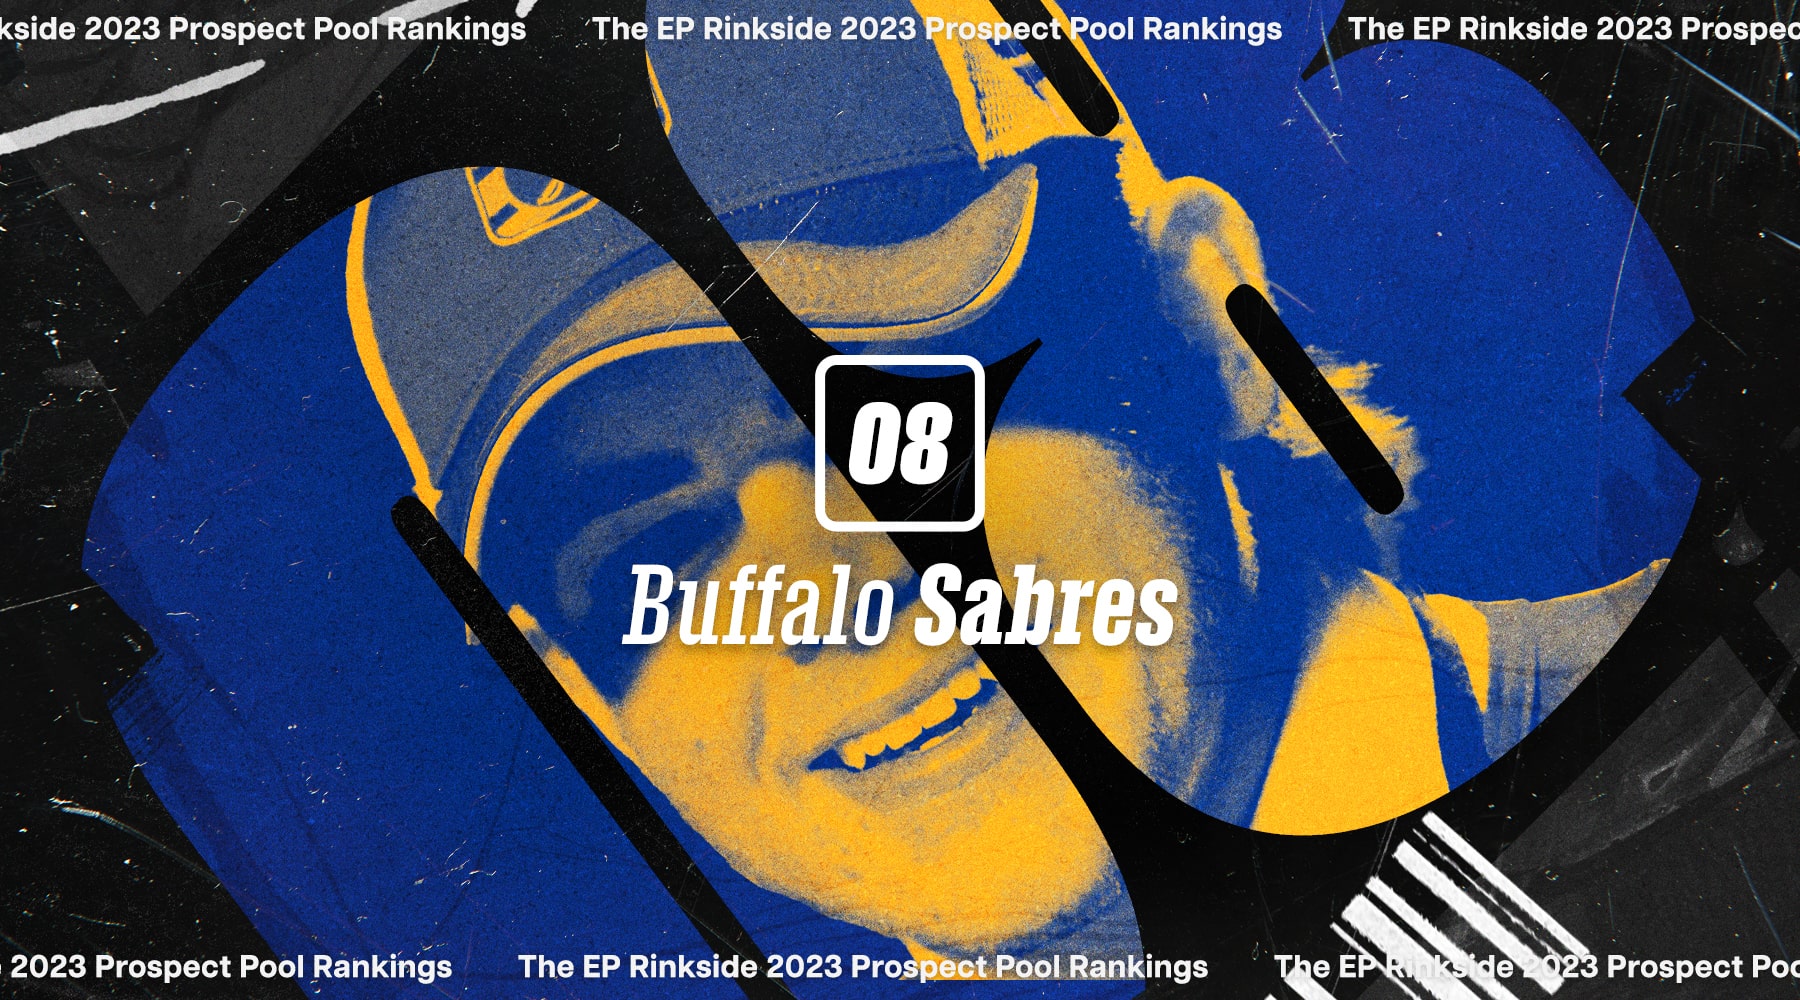 EP Rinkside 2023 NHL Prospect Pool Rankings: No. 8-ranked Buffalo Sabres